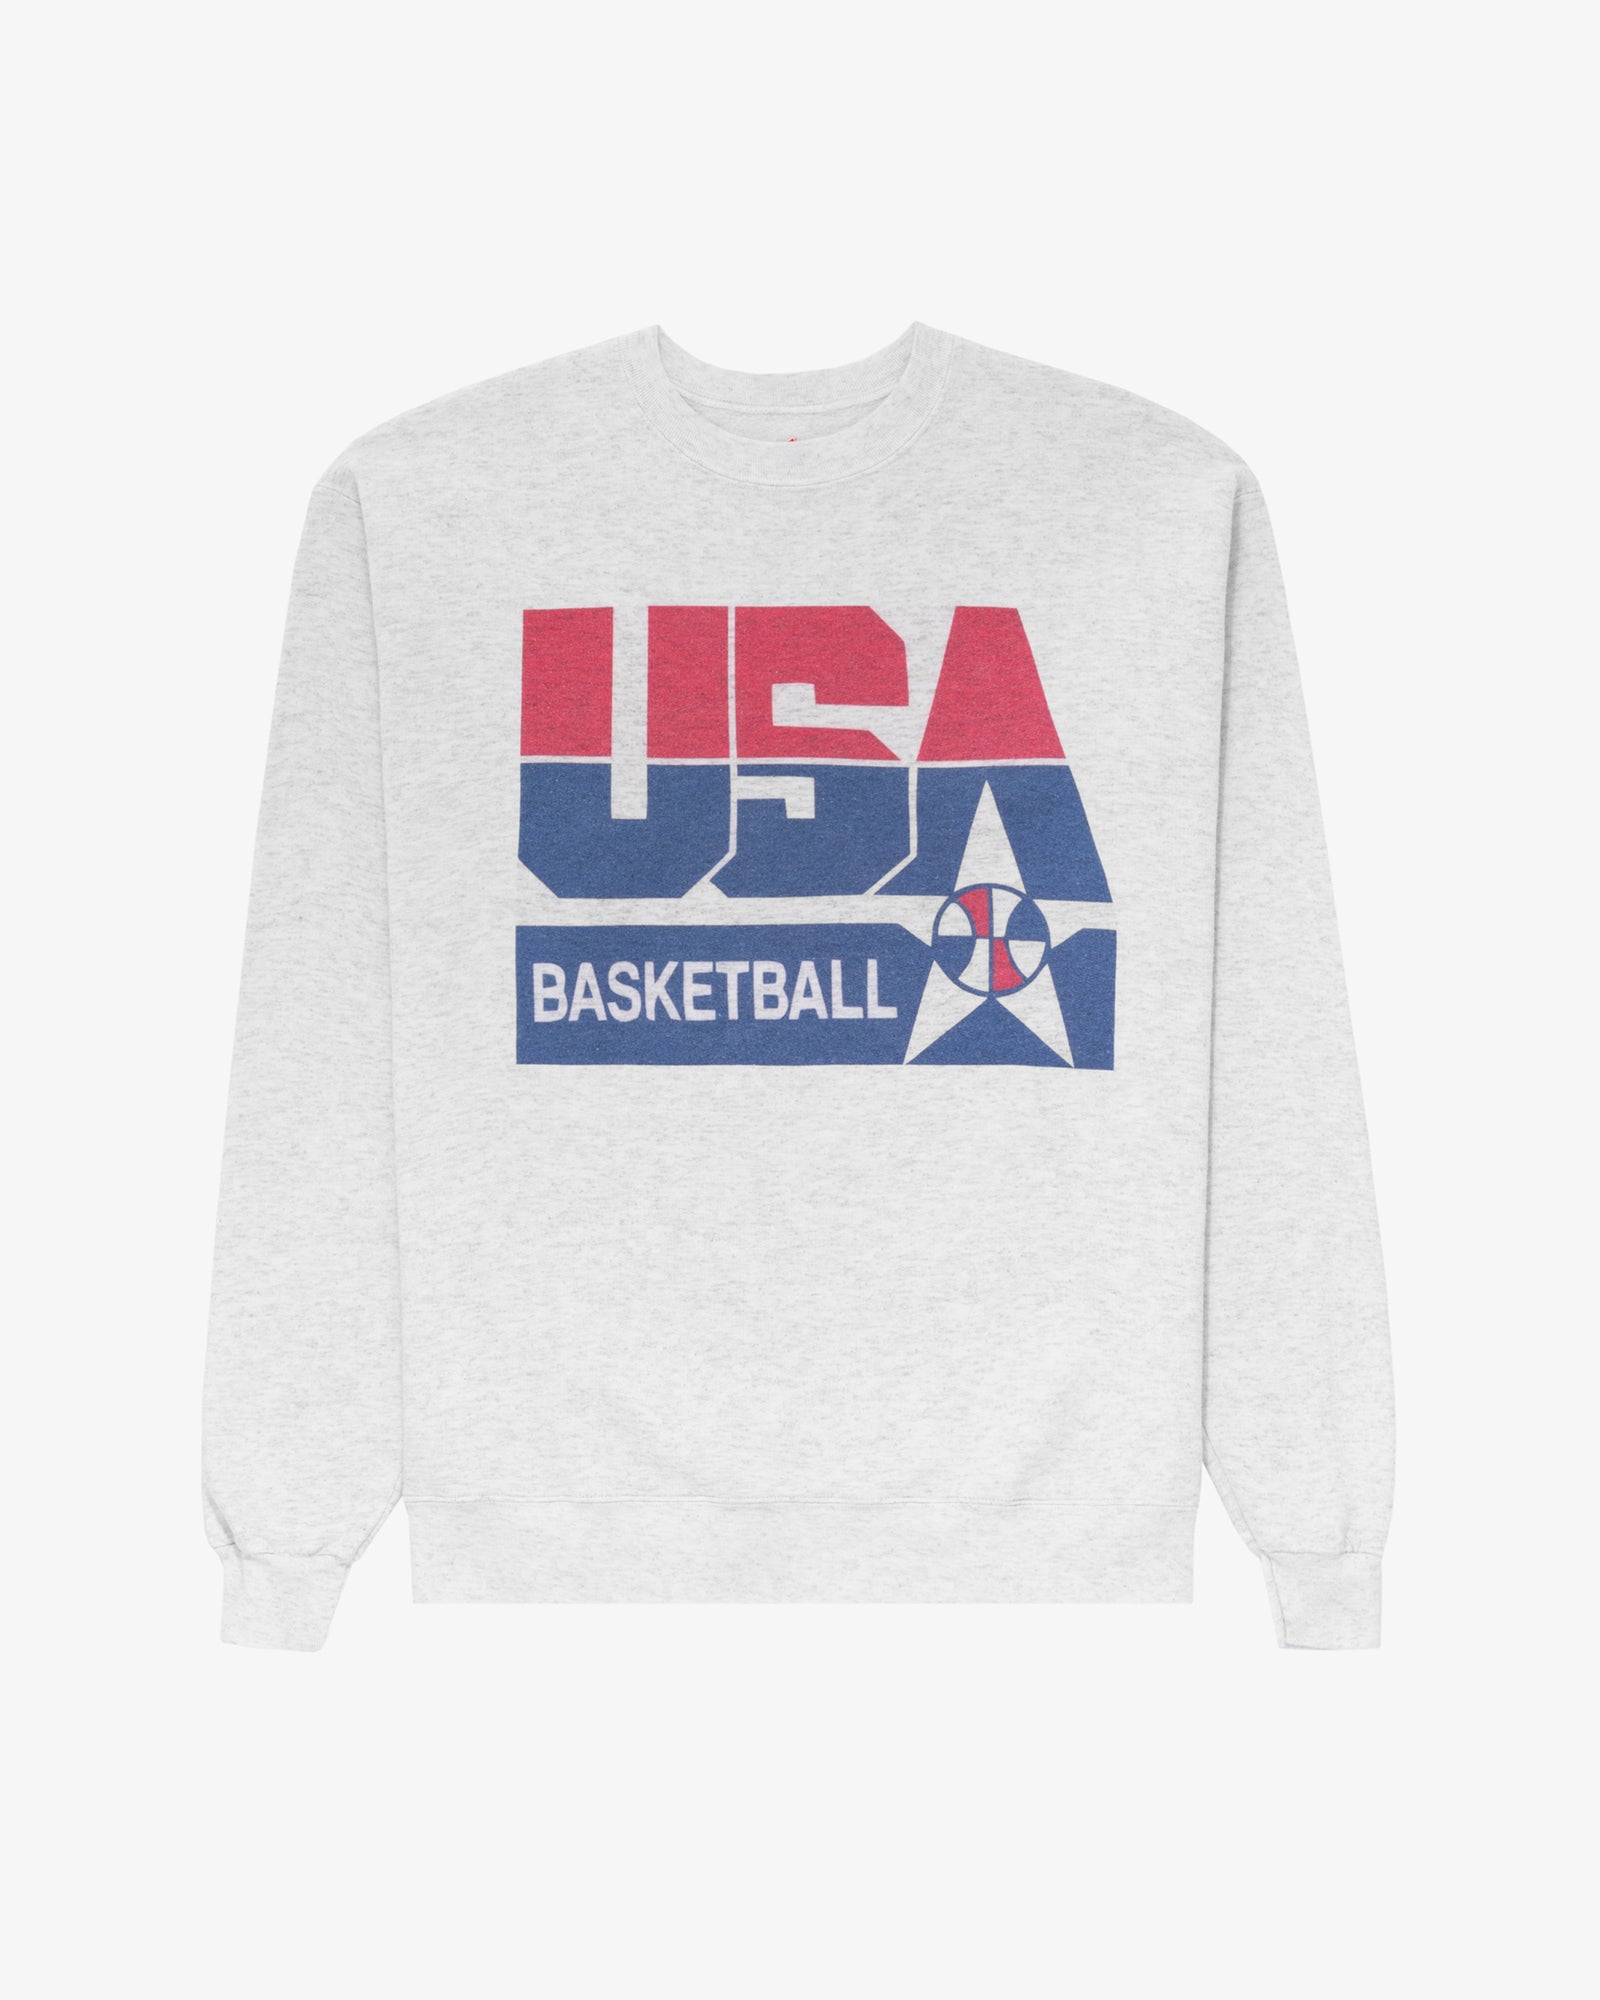 USA Olympic Basketball Crewneck Sweatshirt